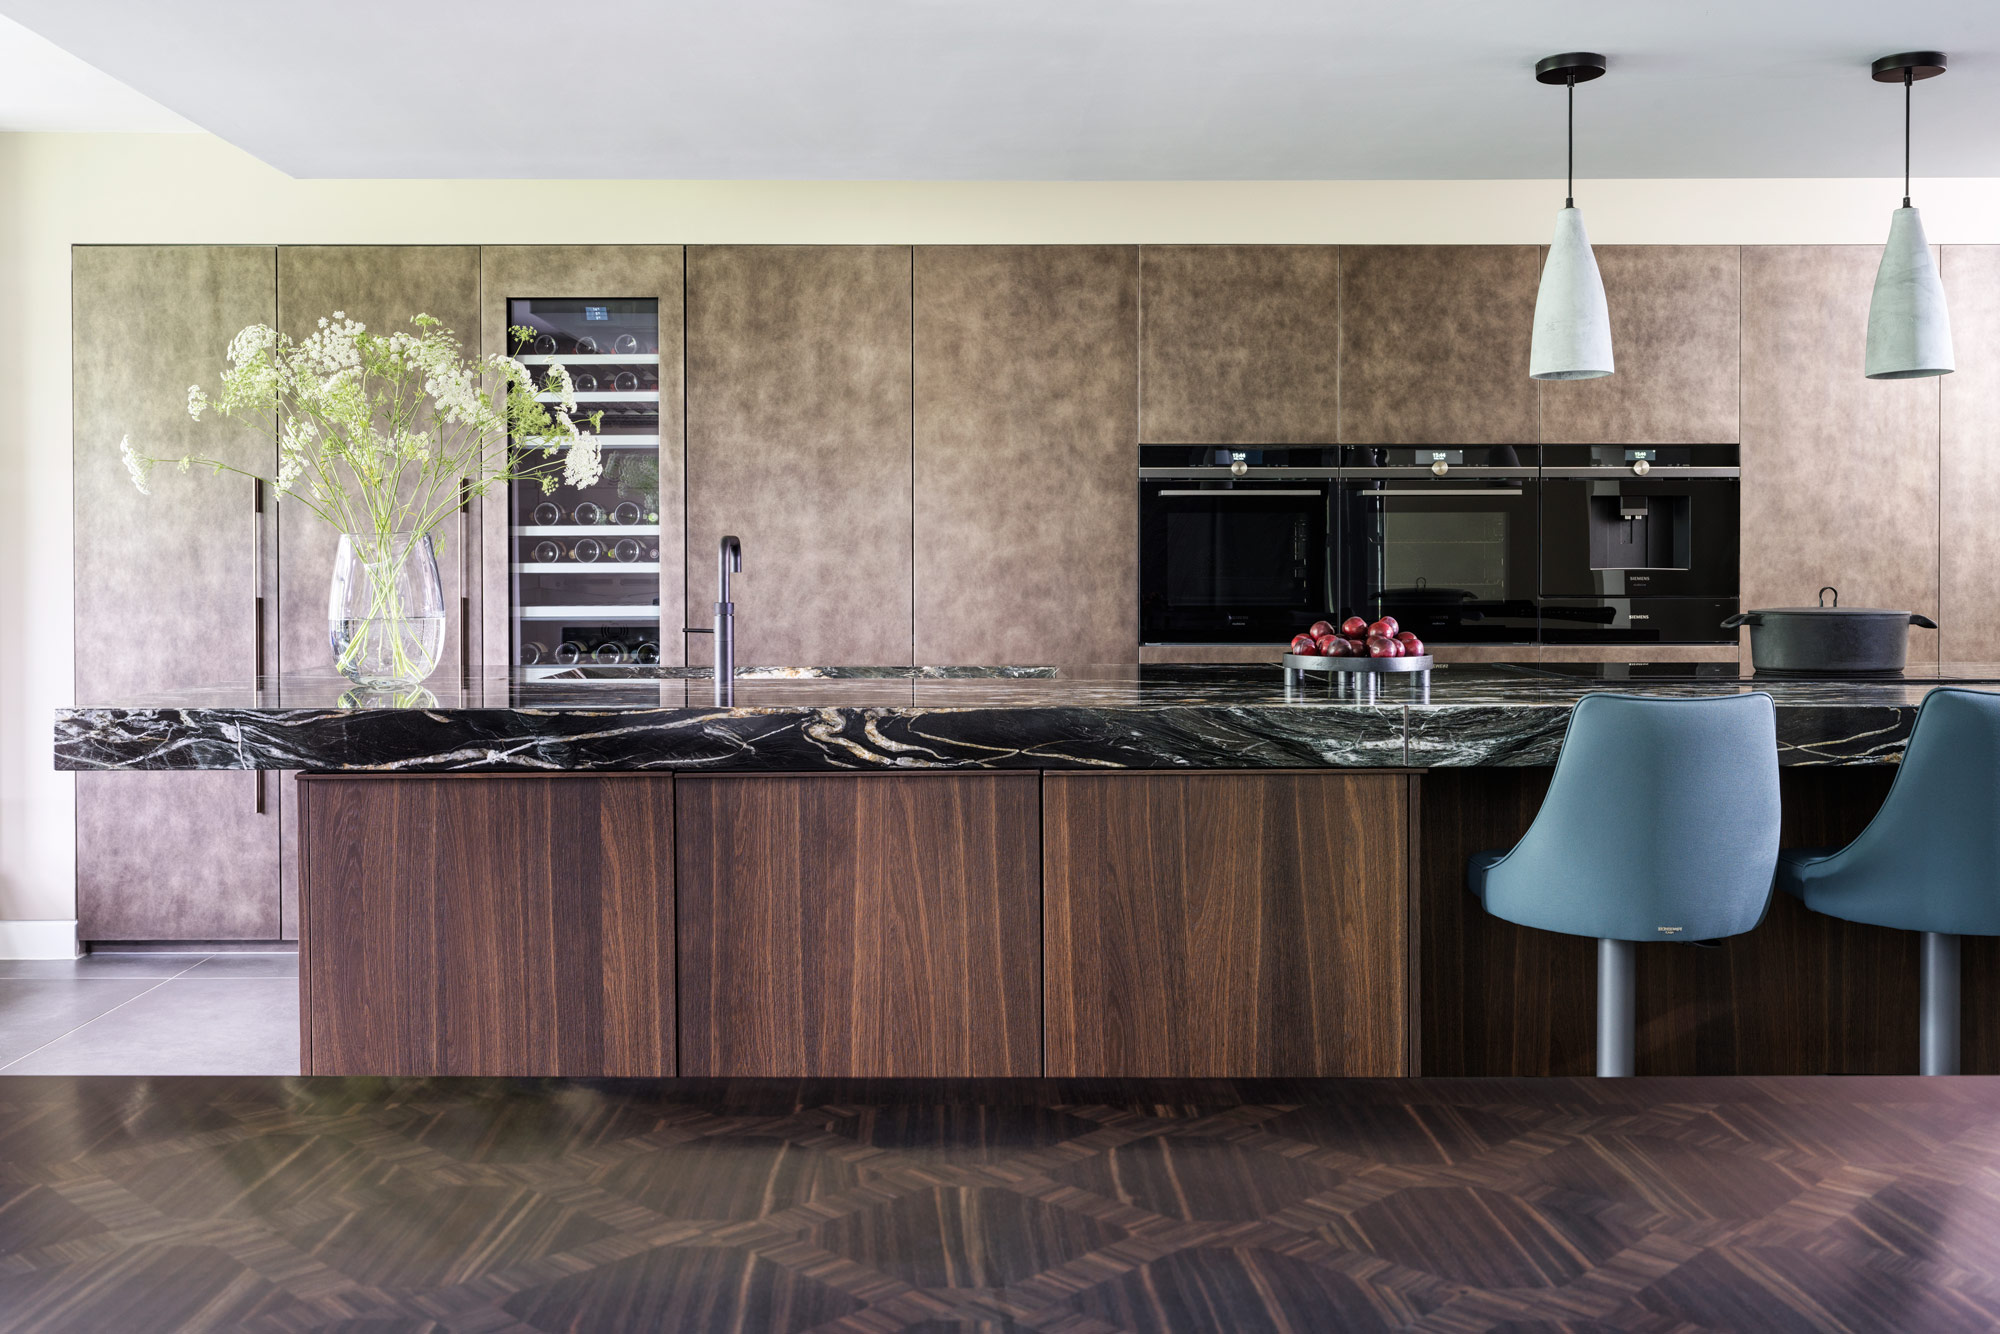 Fontana bespoke kitchen Hertfordshire | Design as Art | interior architectural design studio